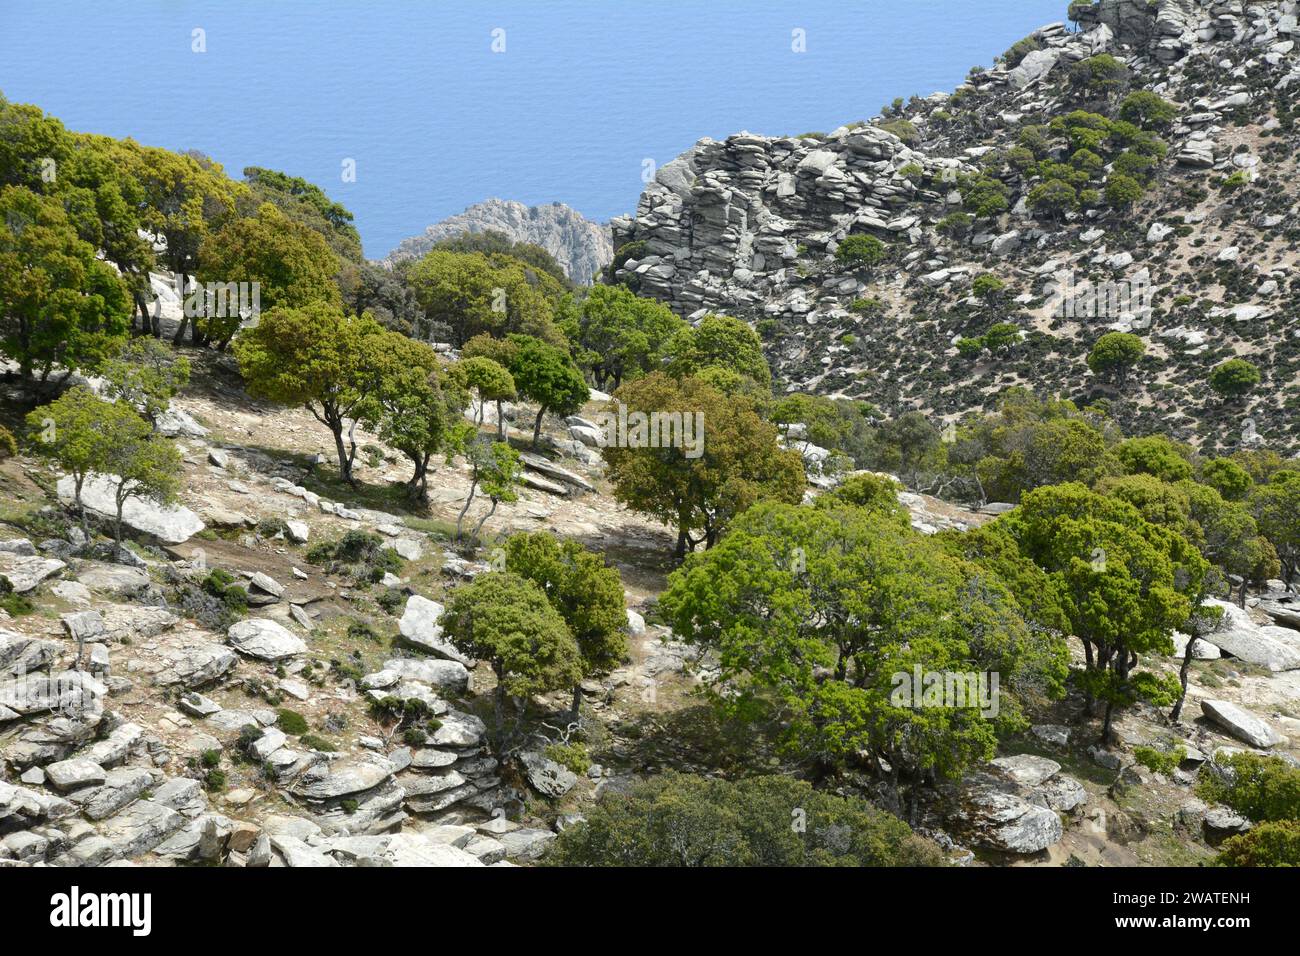 A steep rocky mountainside and cliffs perched over the Aegean Sea, on the south coast of the Greek Island of Ikaria, near Karkinagri, Greece. Stock Photo